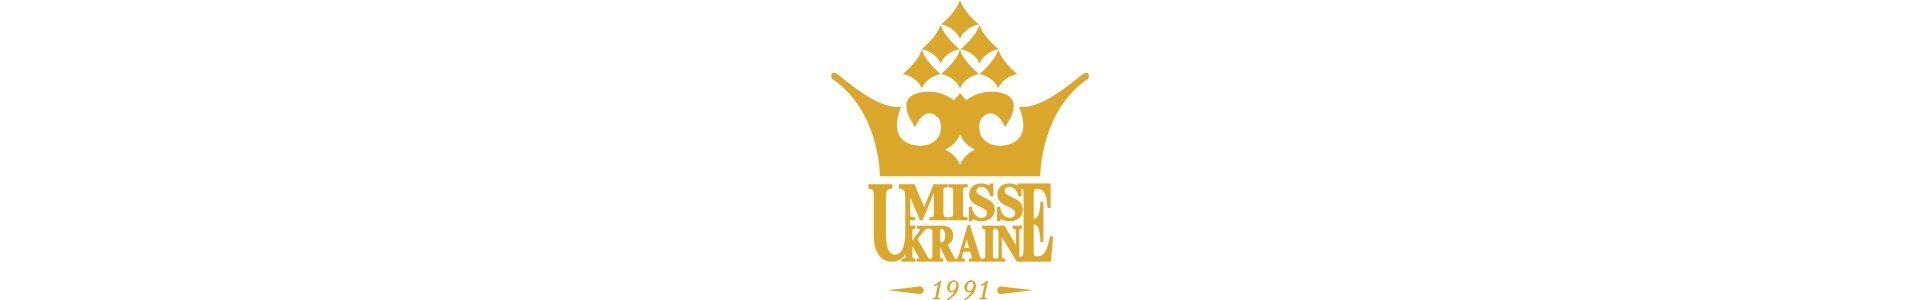 The finale of "Miss Ukraine 2016" Contest